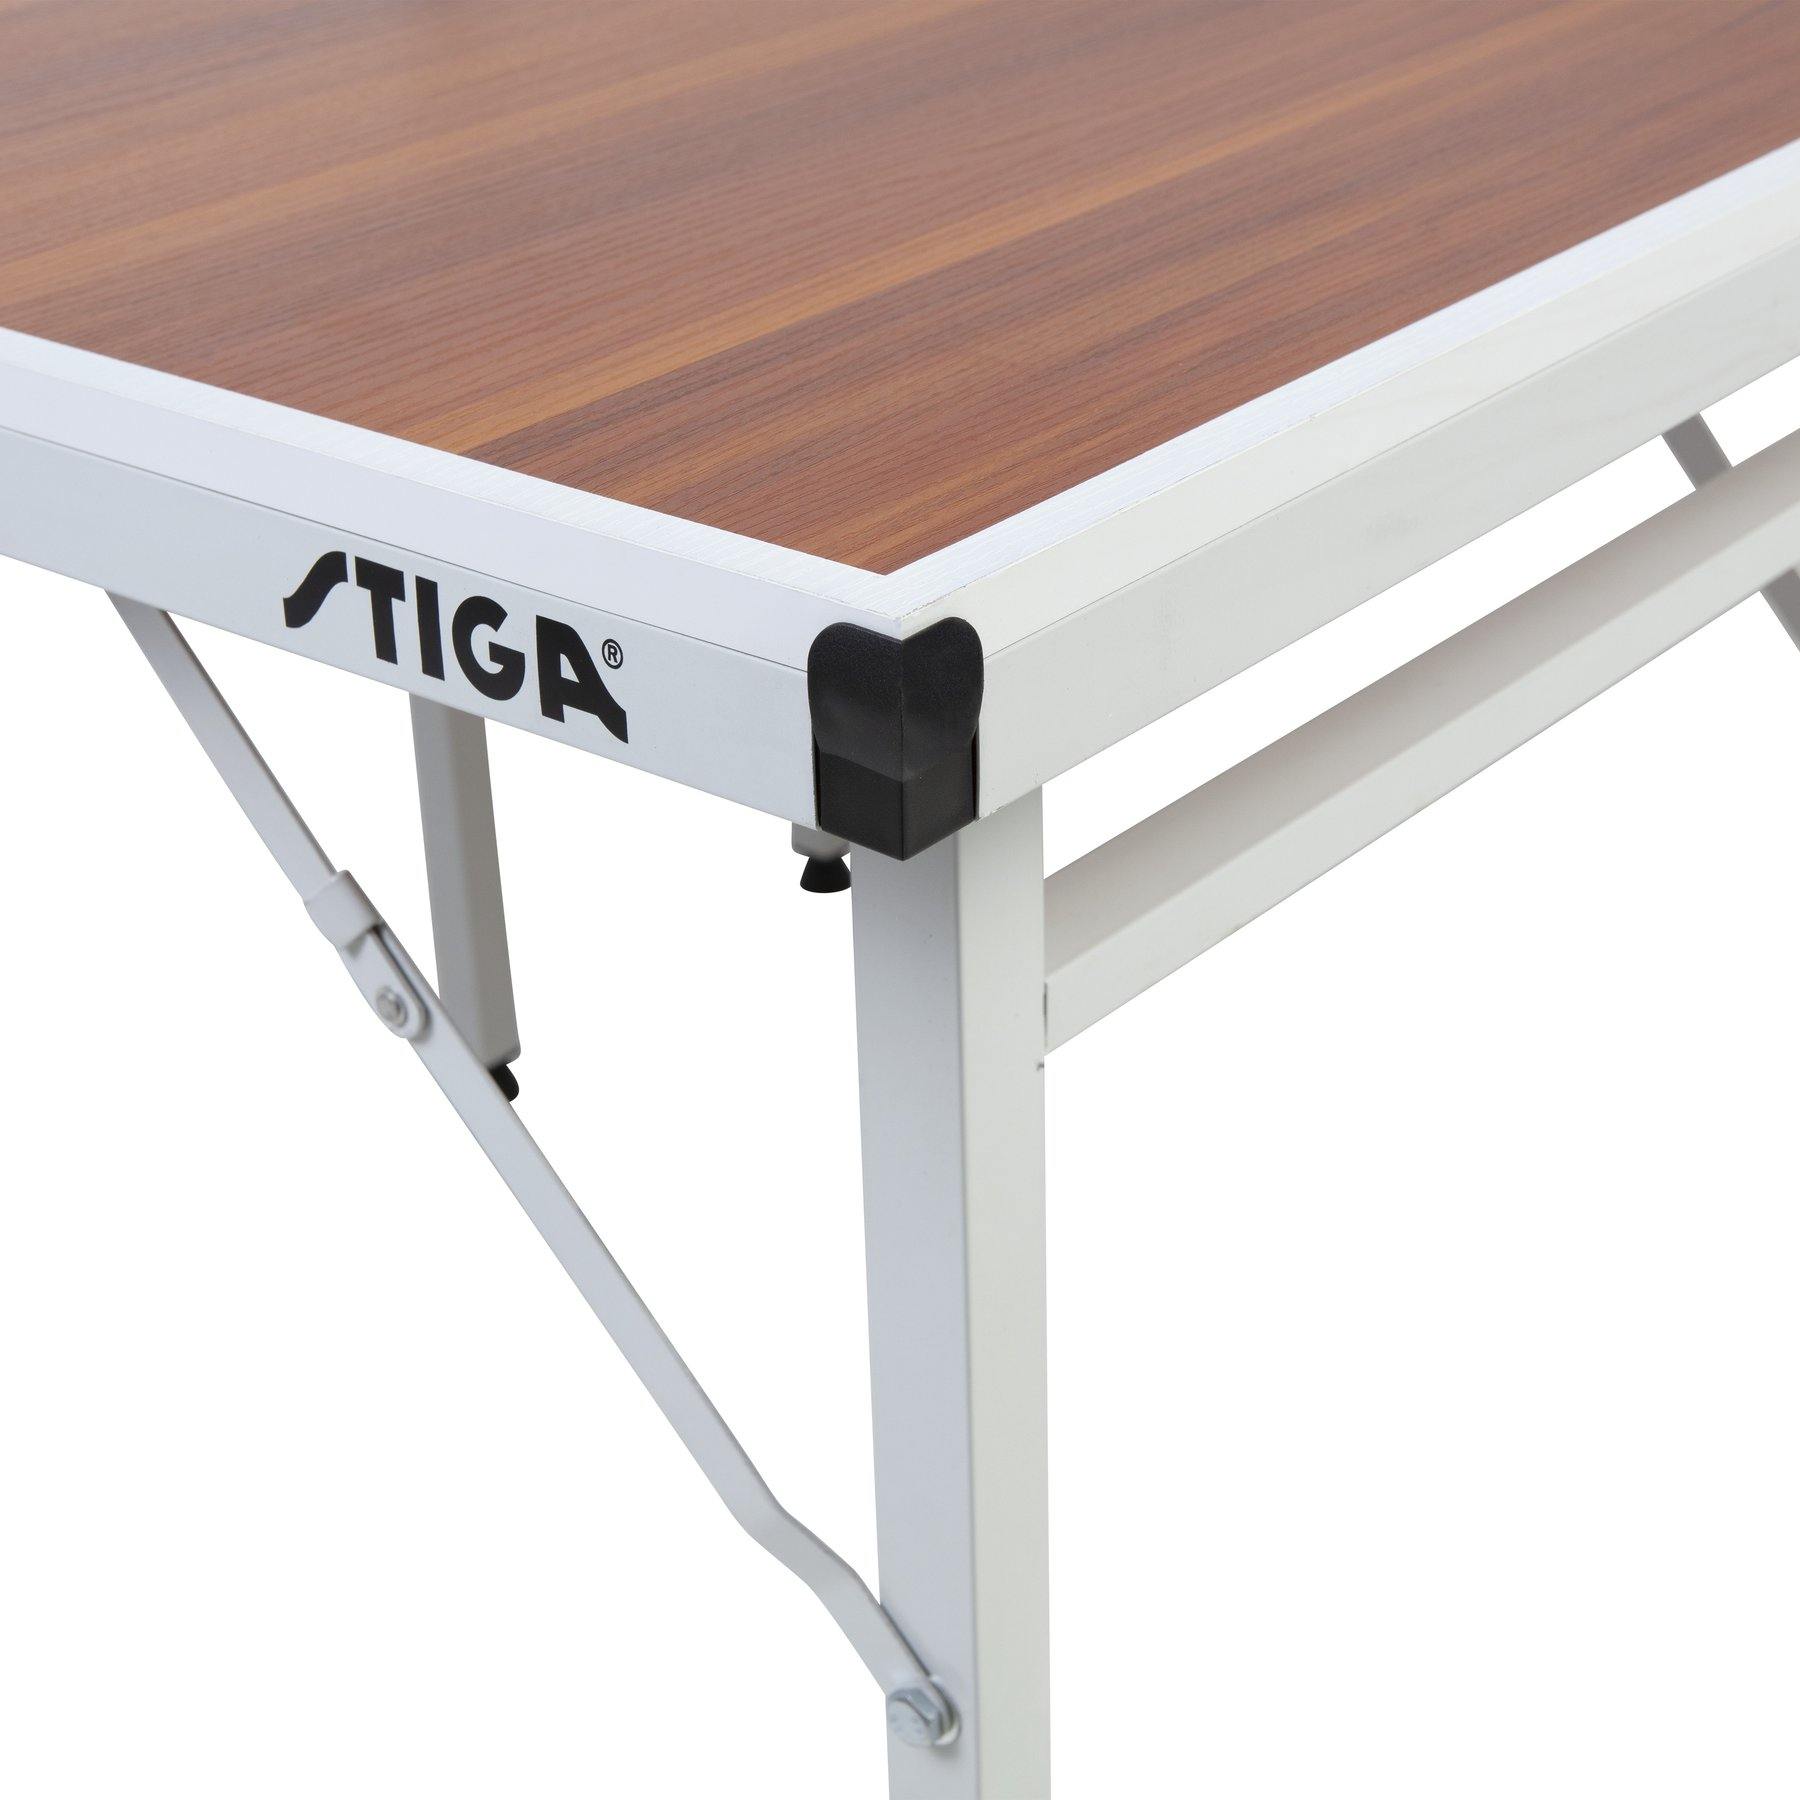 Stiga Table Tennis STIGA - Space Saver Table Tennis Table - Woodgrain - T8460-2W